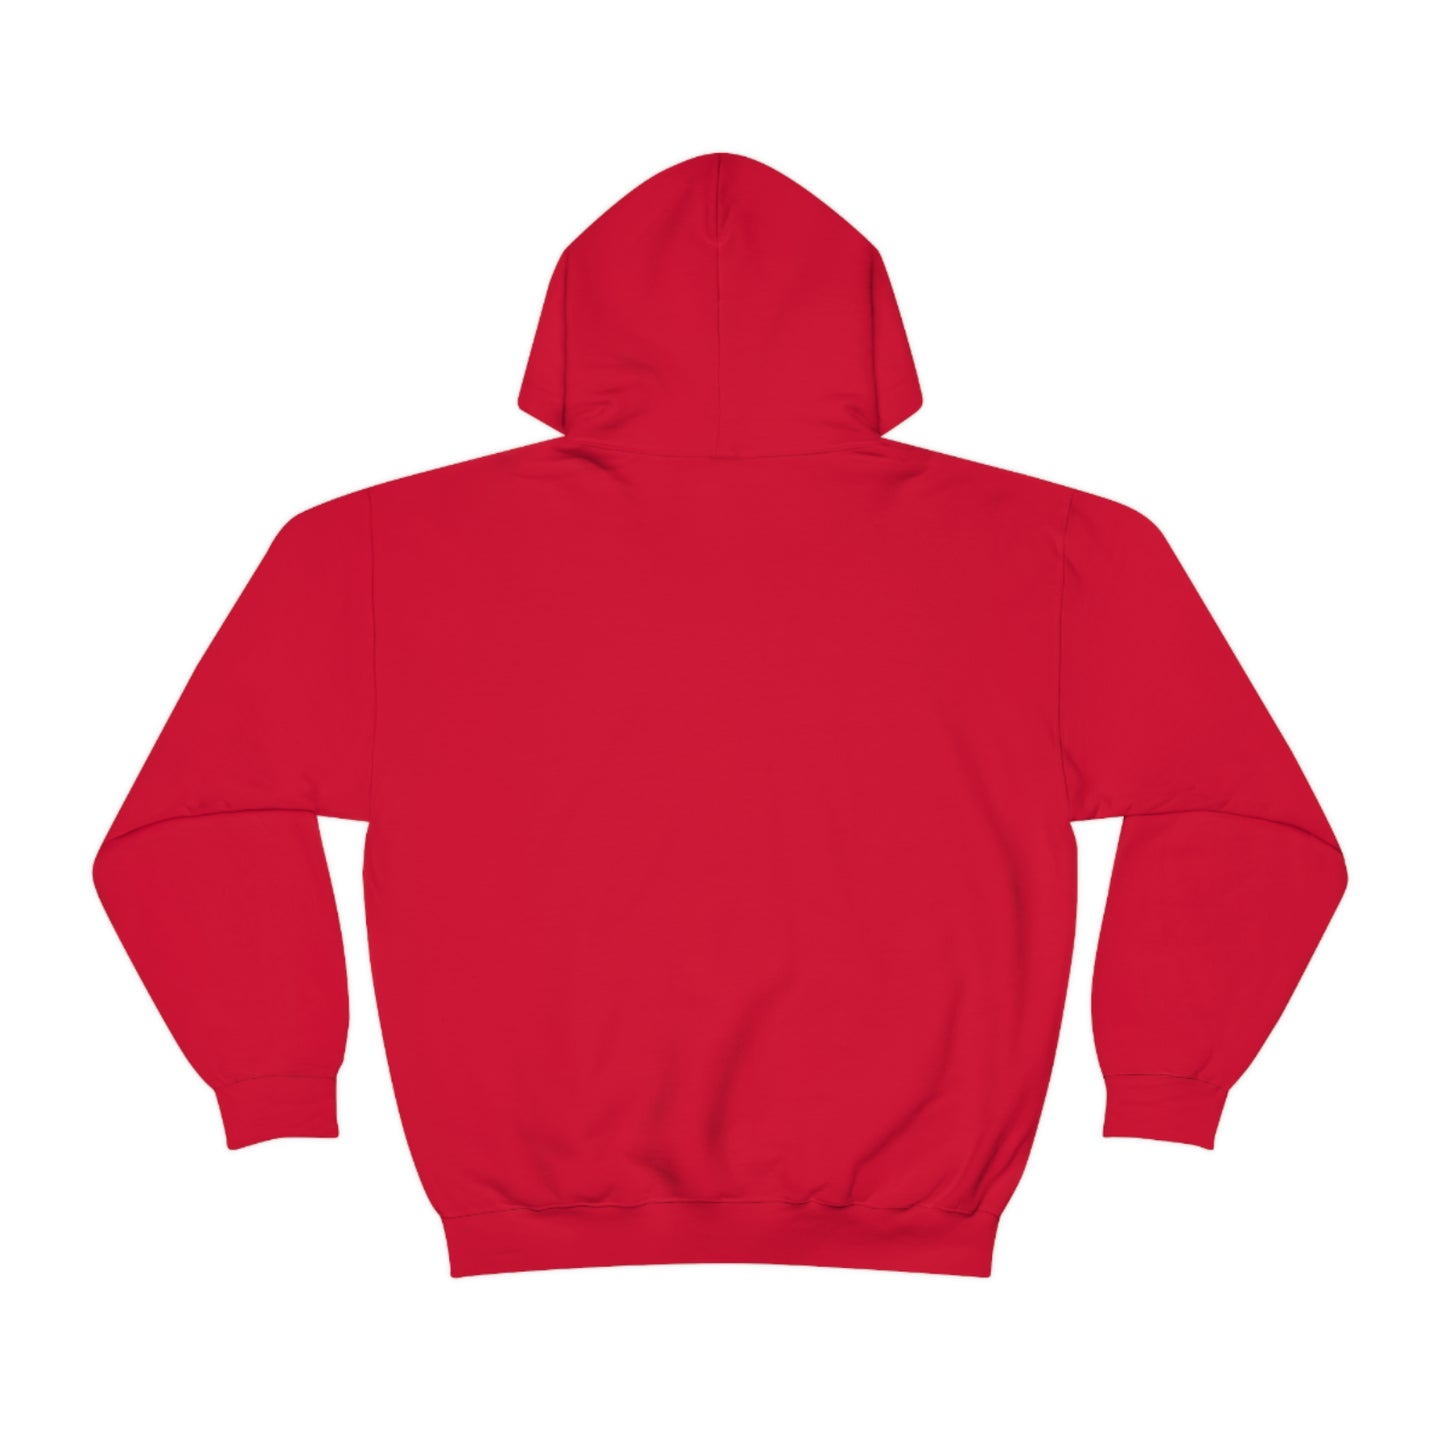 AMANTES AMENTES Unisex Heavy Blend™ Hooded Sweatshirt